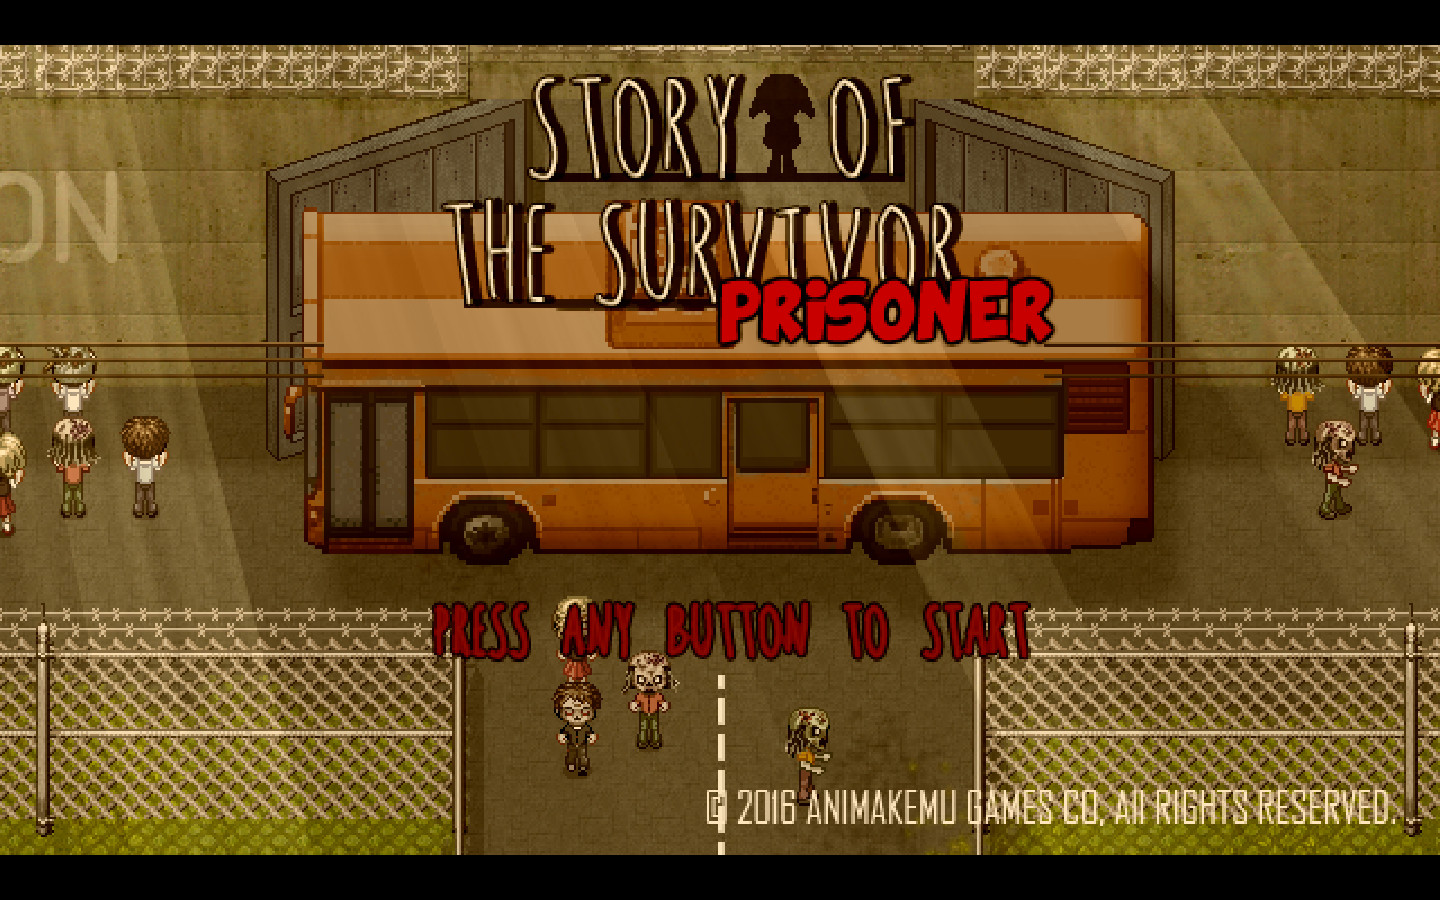 Story of the Survivor: Prisoner Steam CD Key, $0.55